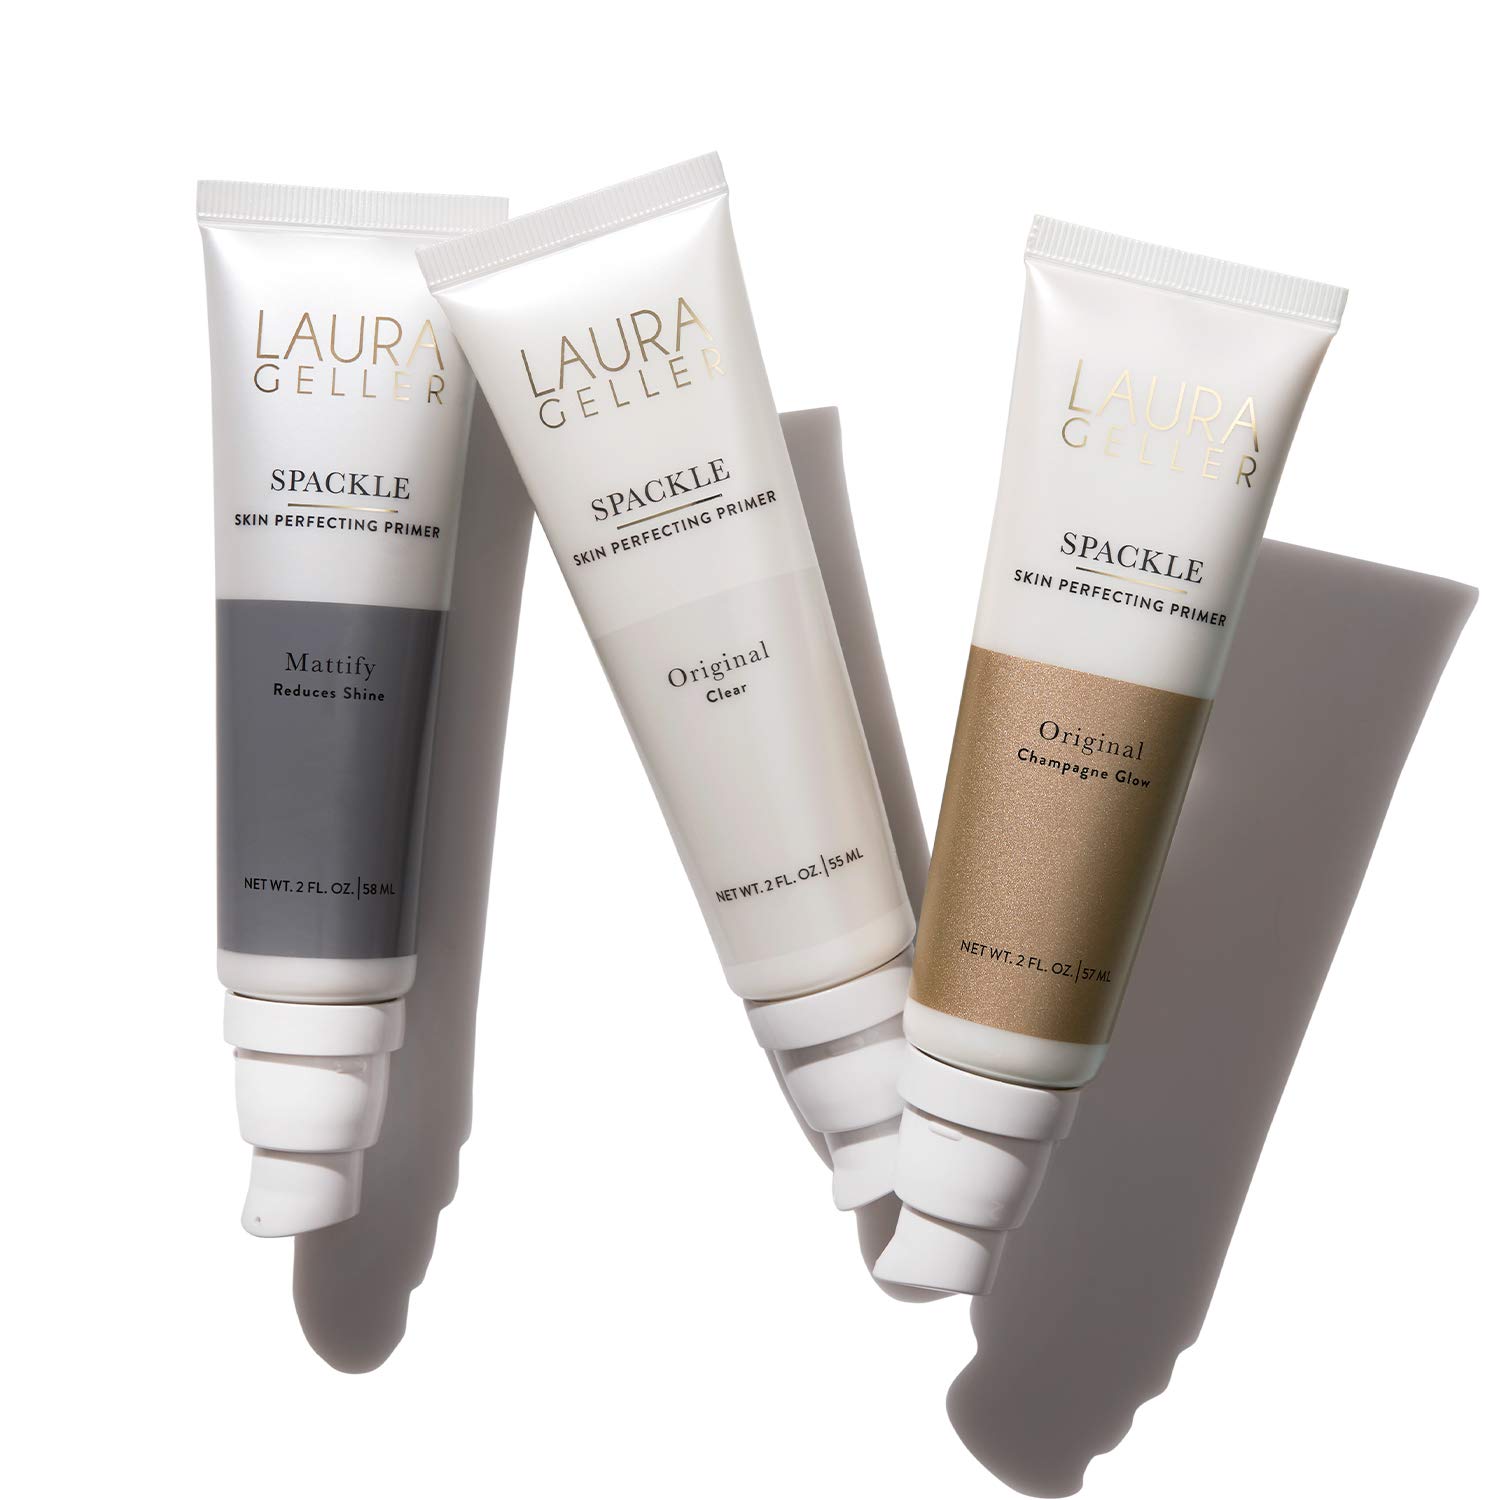  LAURA GELLER NEW YORK Spackle Skin Perfecting Primer, Original in Champagne Glow, 2 Fl Oz